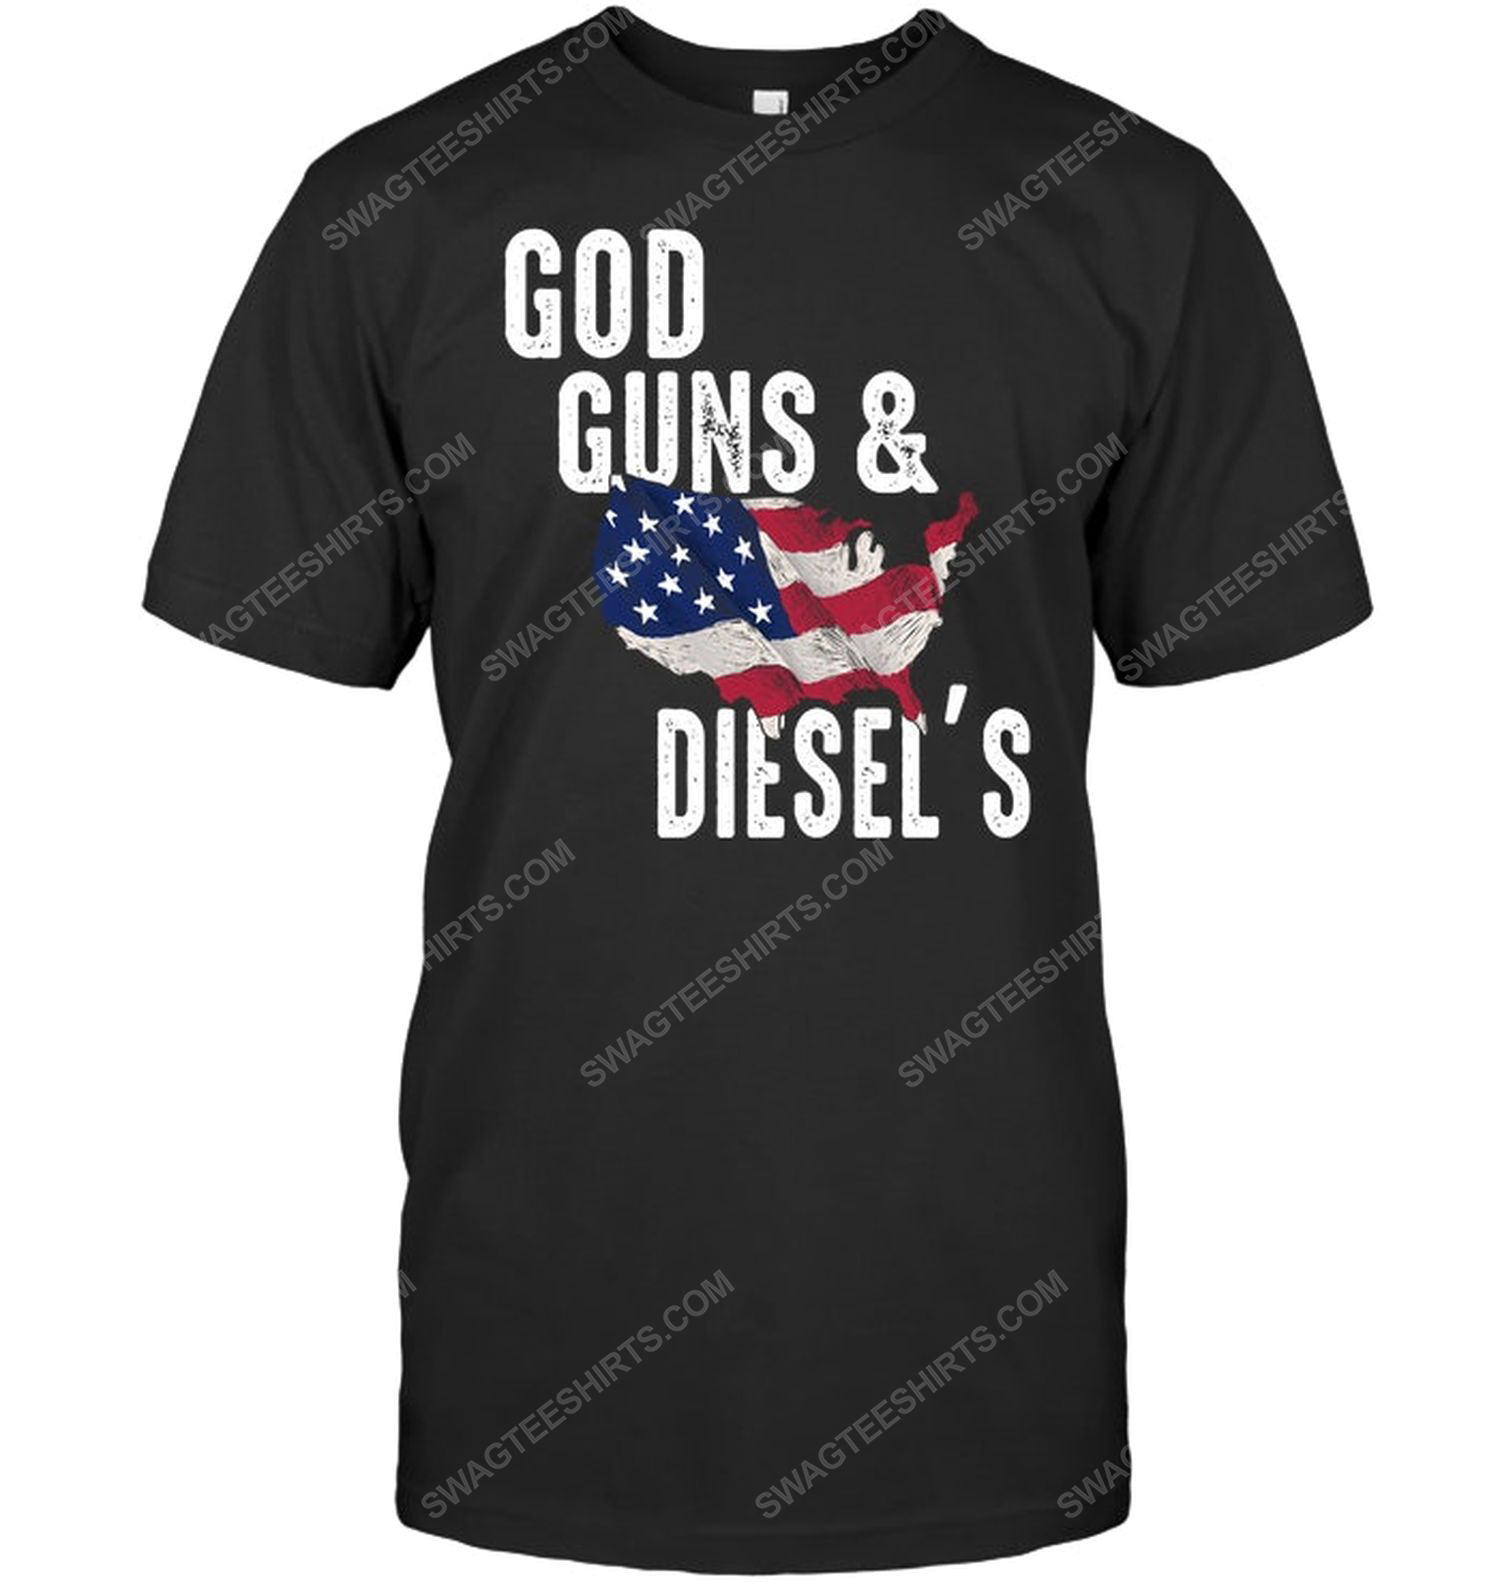 God guns and diesel's american flag political tshirt